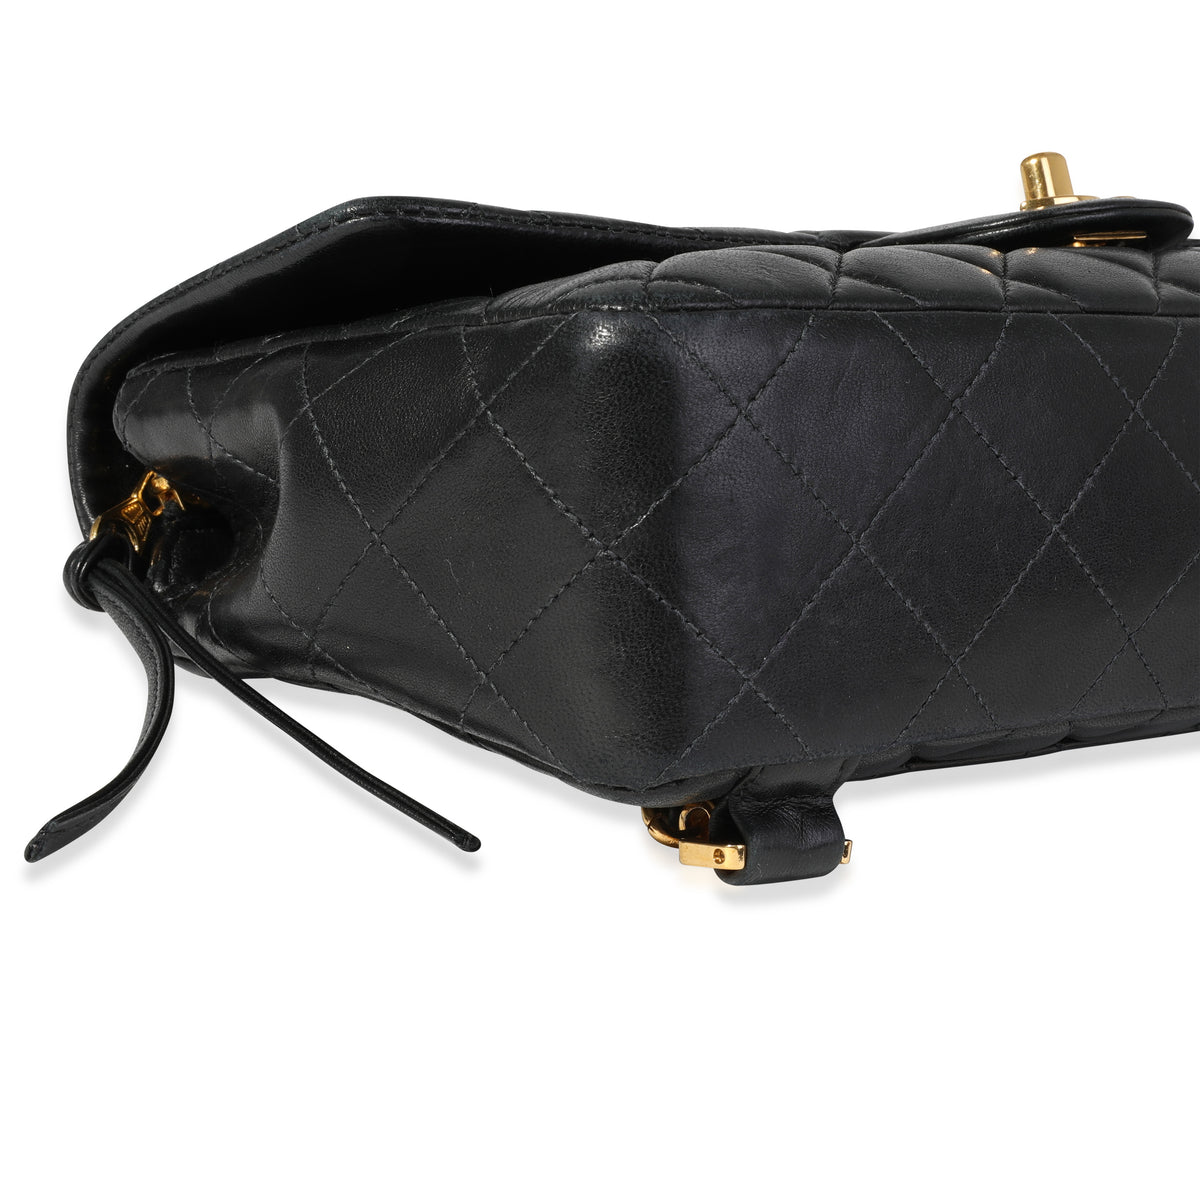 Chanel Vintage Black Quilted Lambskin Backpack